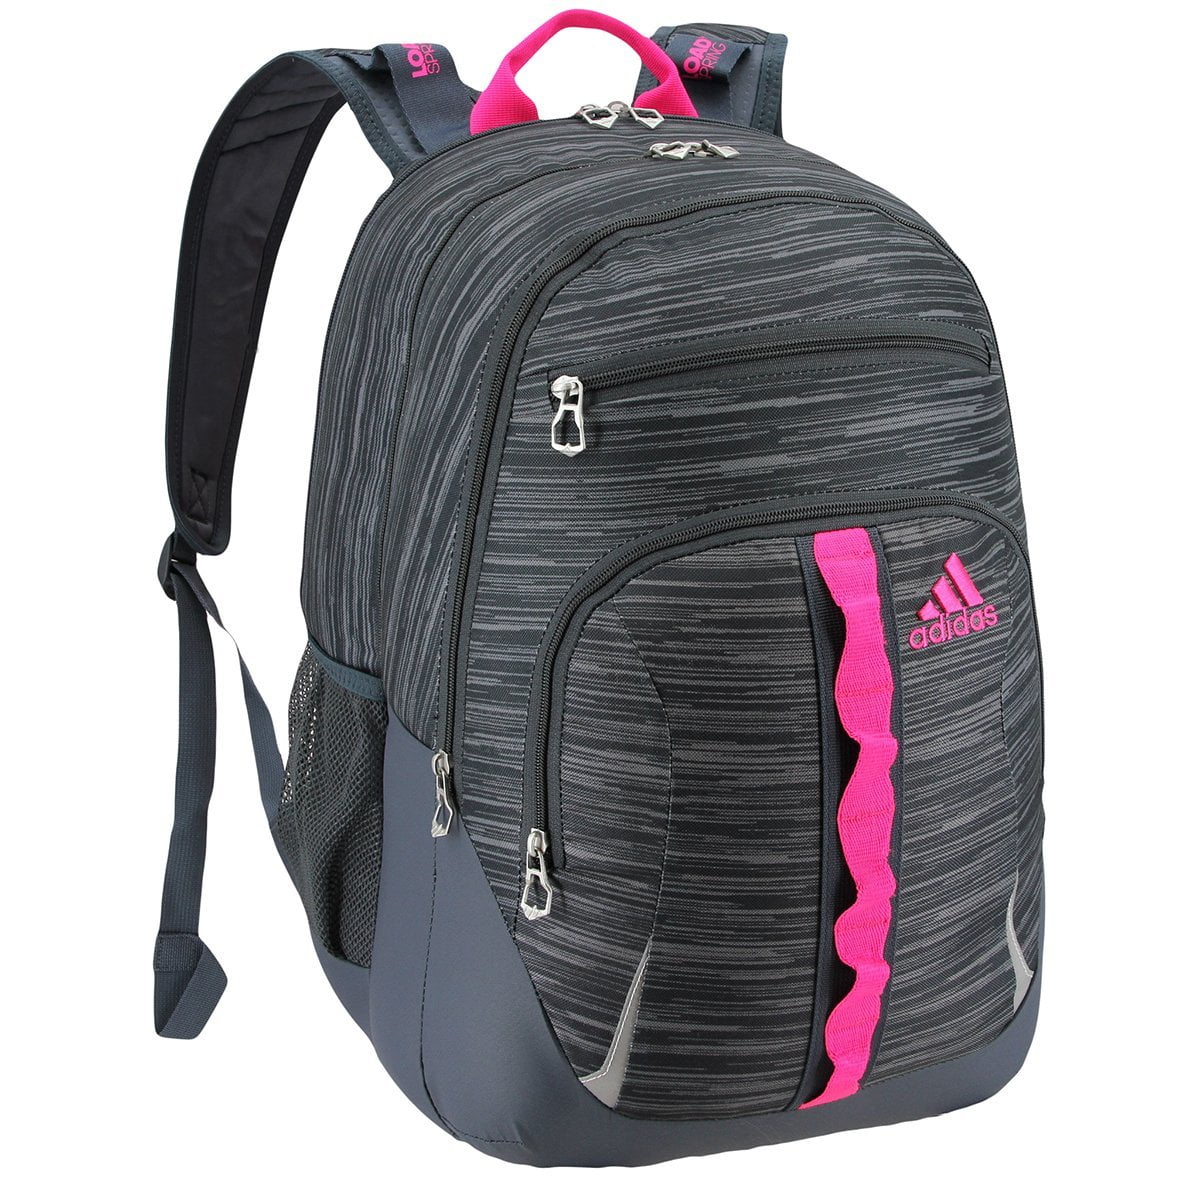 adidas prime ii backpack